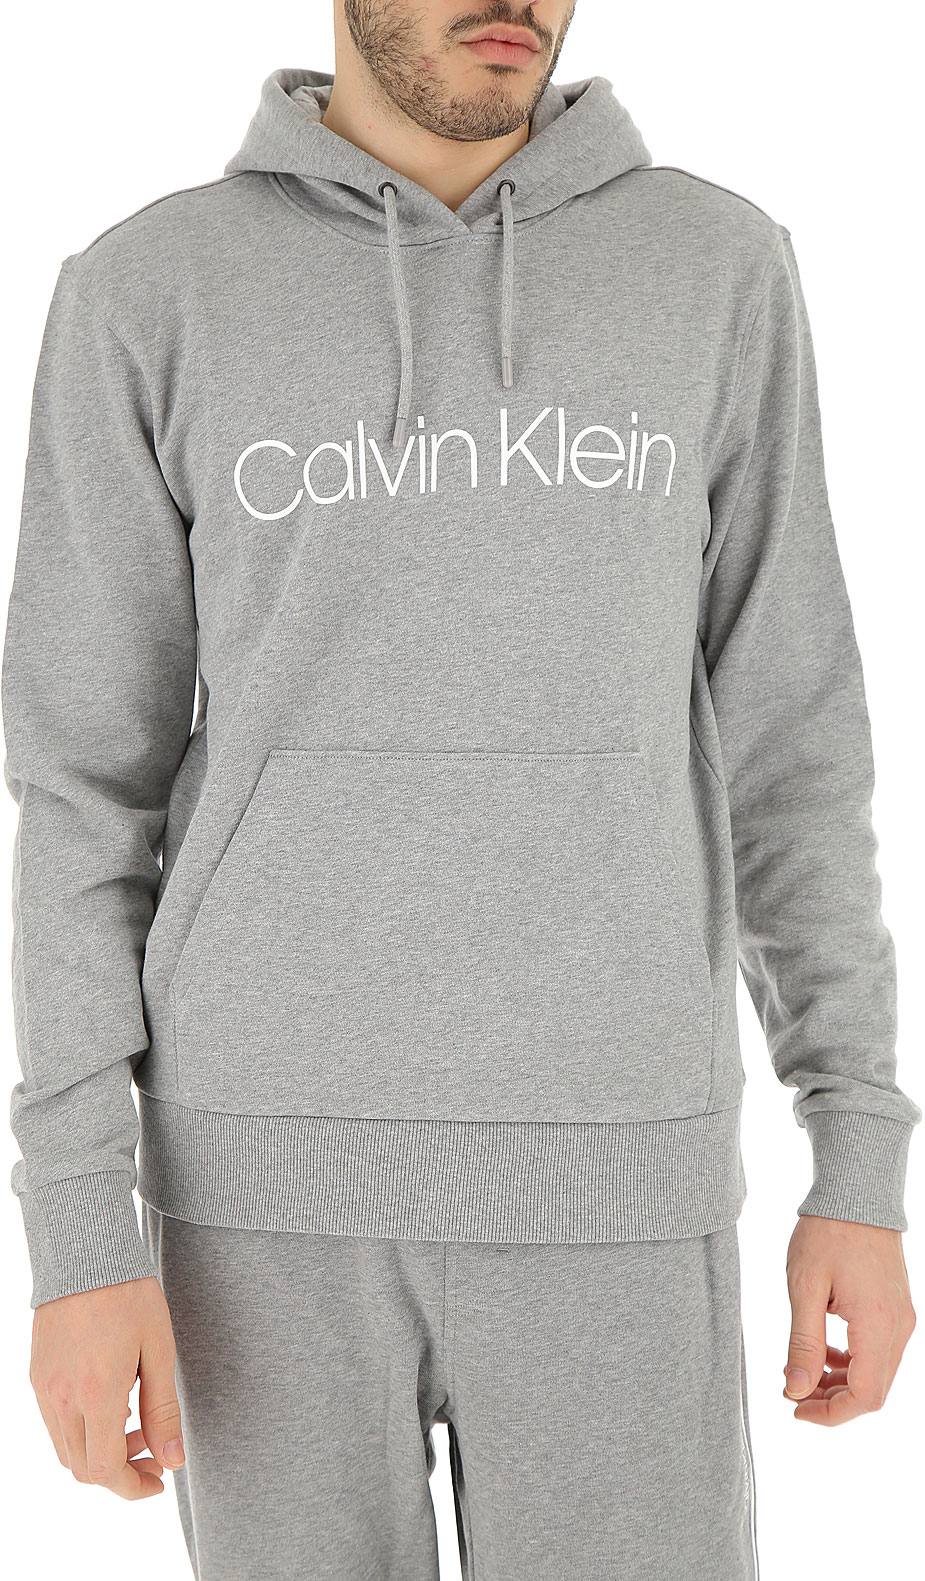 Mens Clothing Calvin Klein, Style code: k10k103664-092-